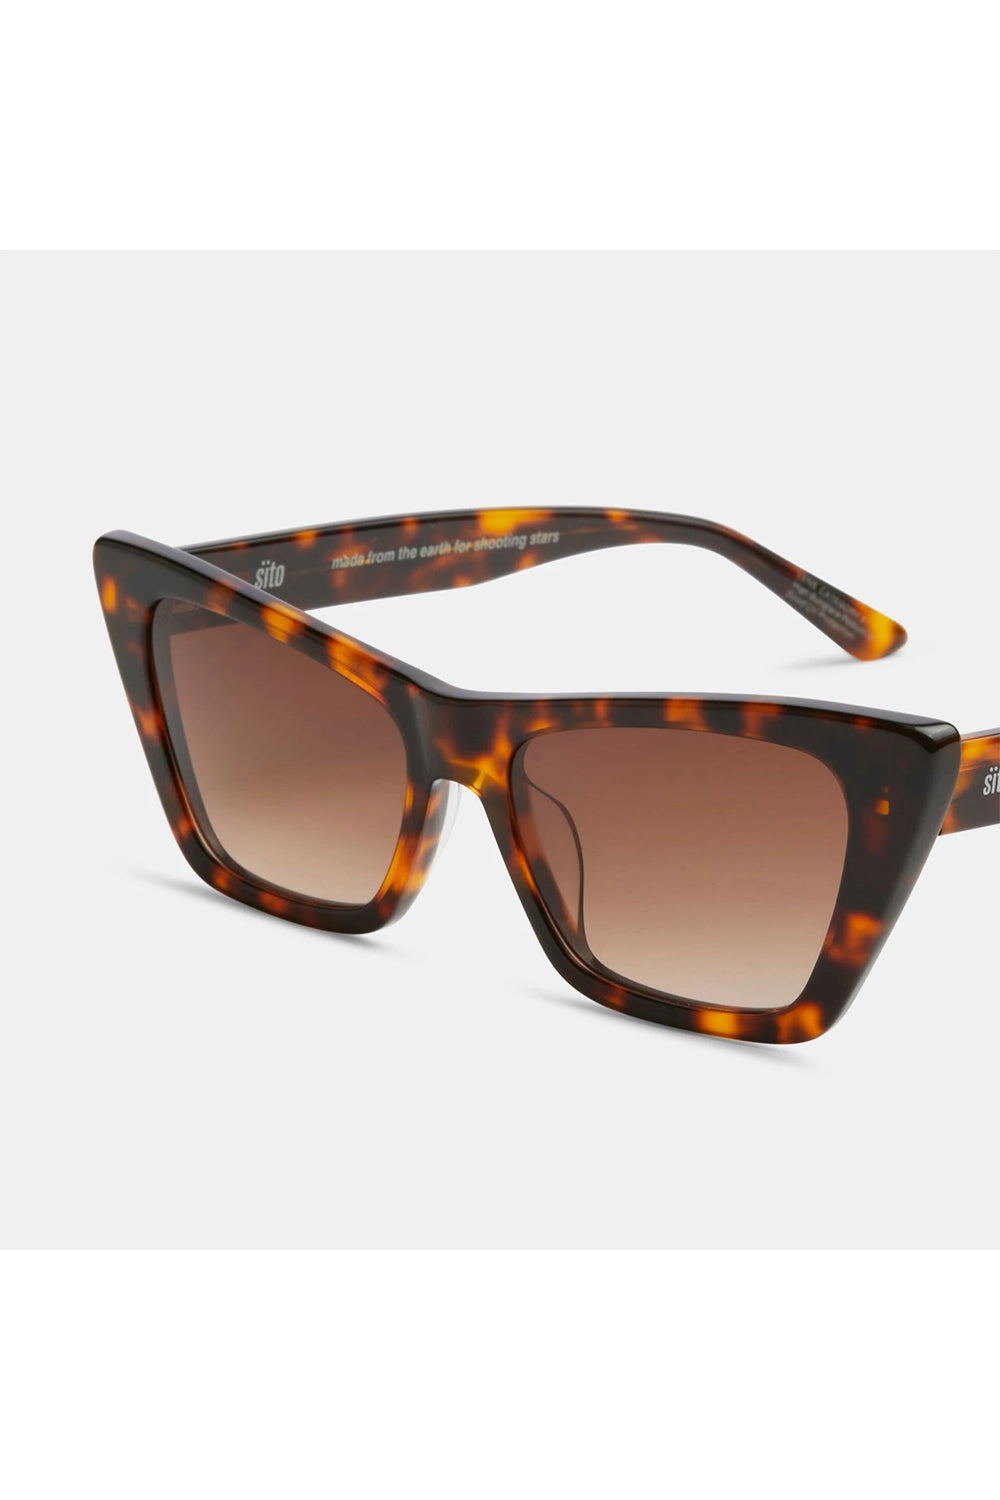 Sito Wonderland Sunglasses